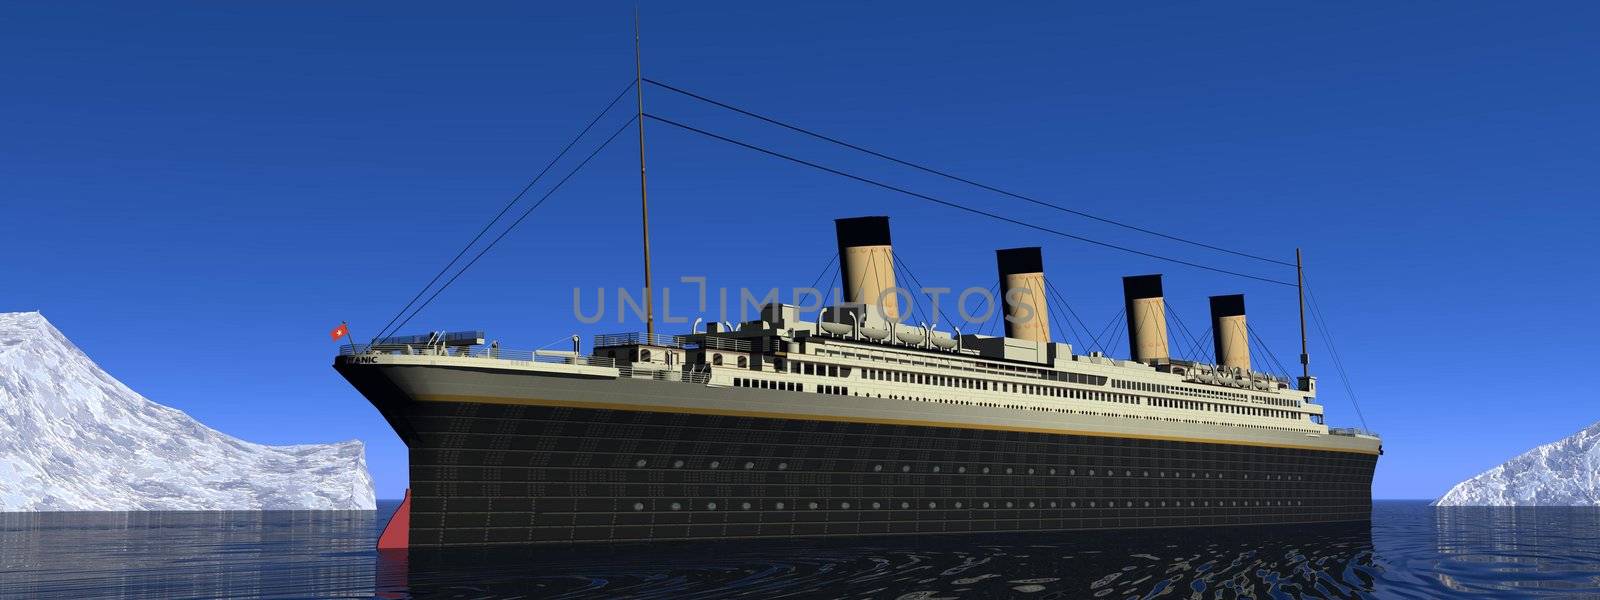 Titanic boat - 3D render by Elenaphotos21